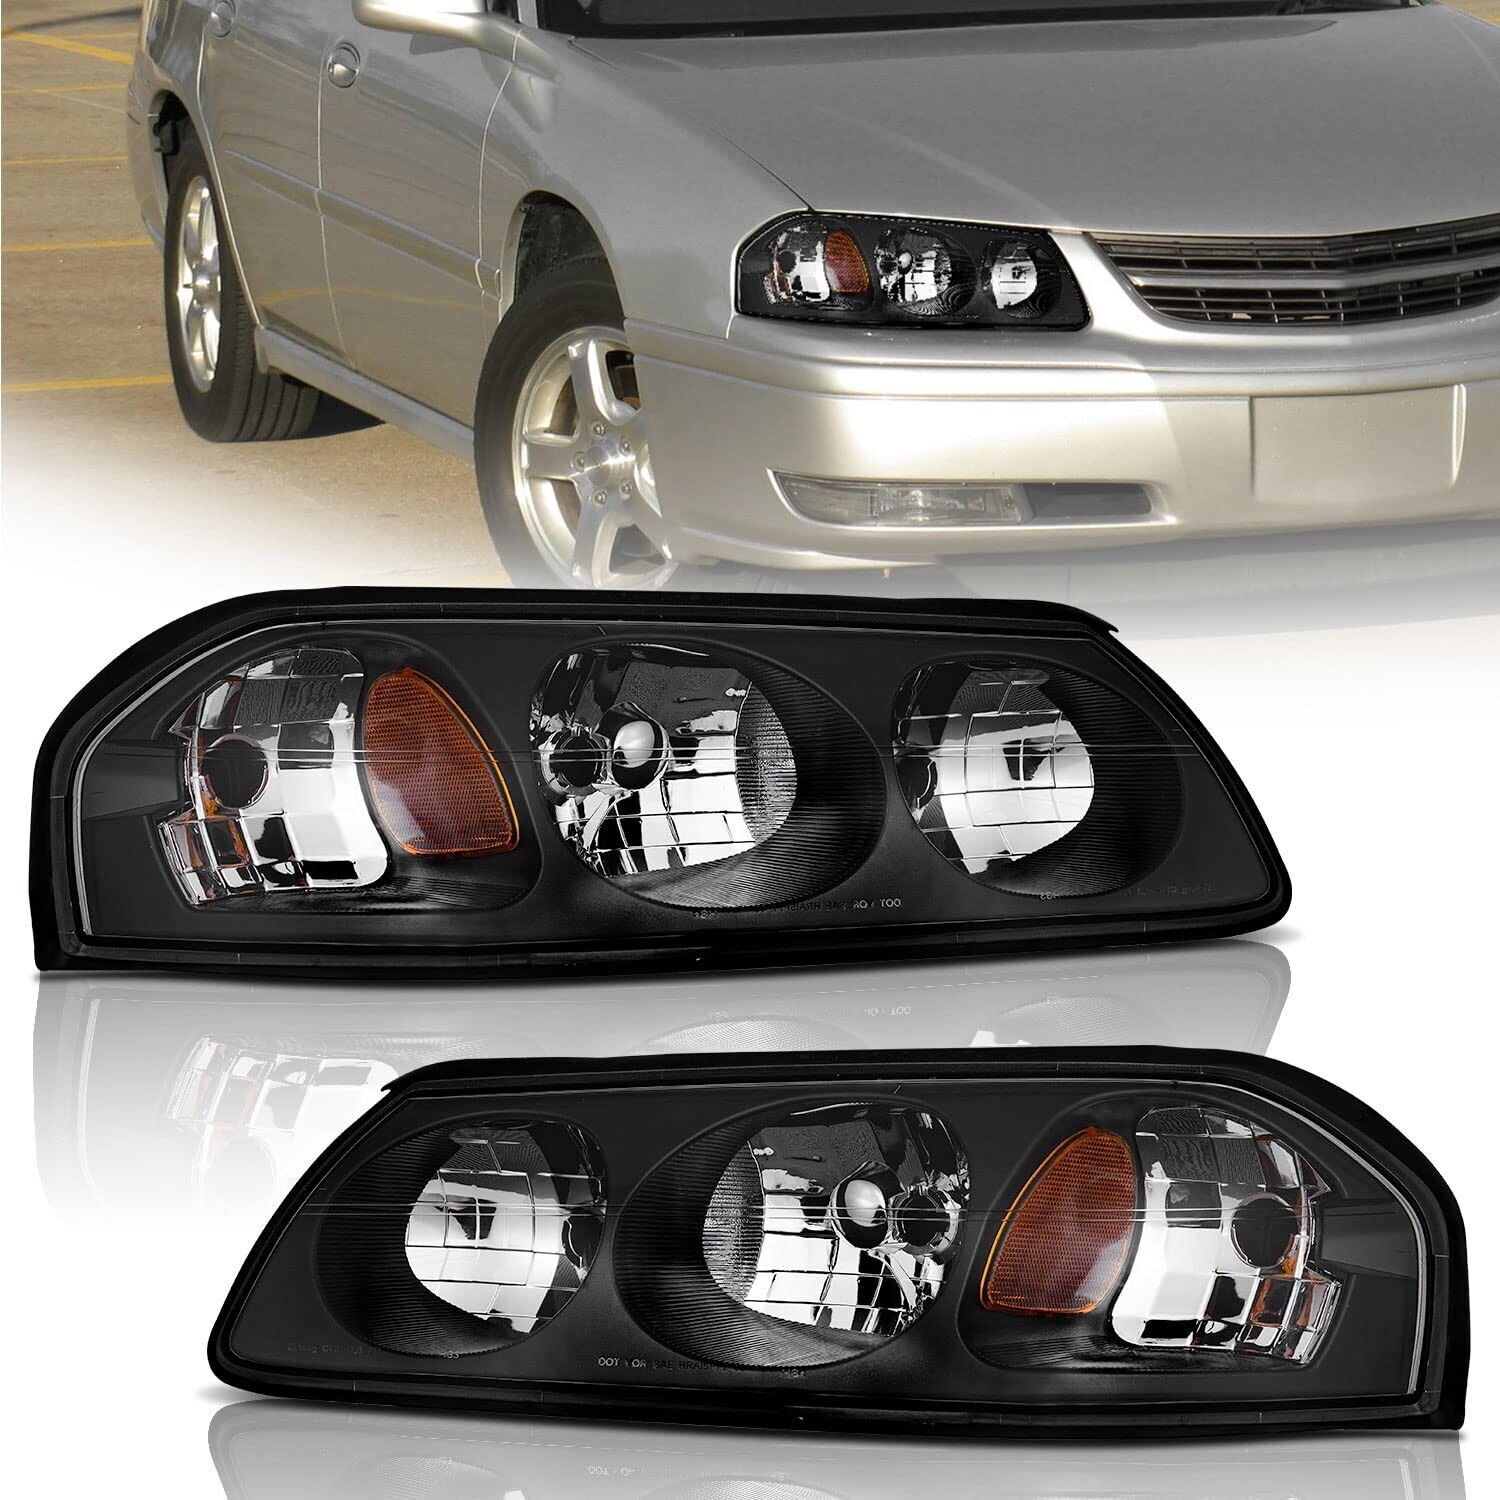 WEELMOTO Headlights For 2000-2005 Chevy Impala Chrome Headlamps Assembly Pair